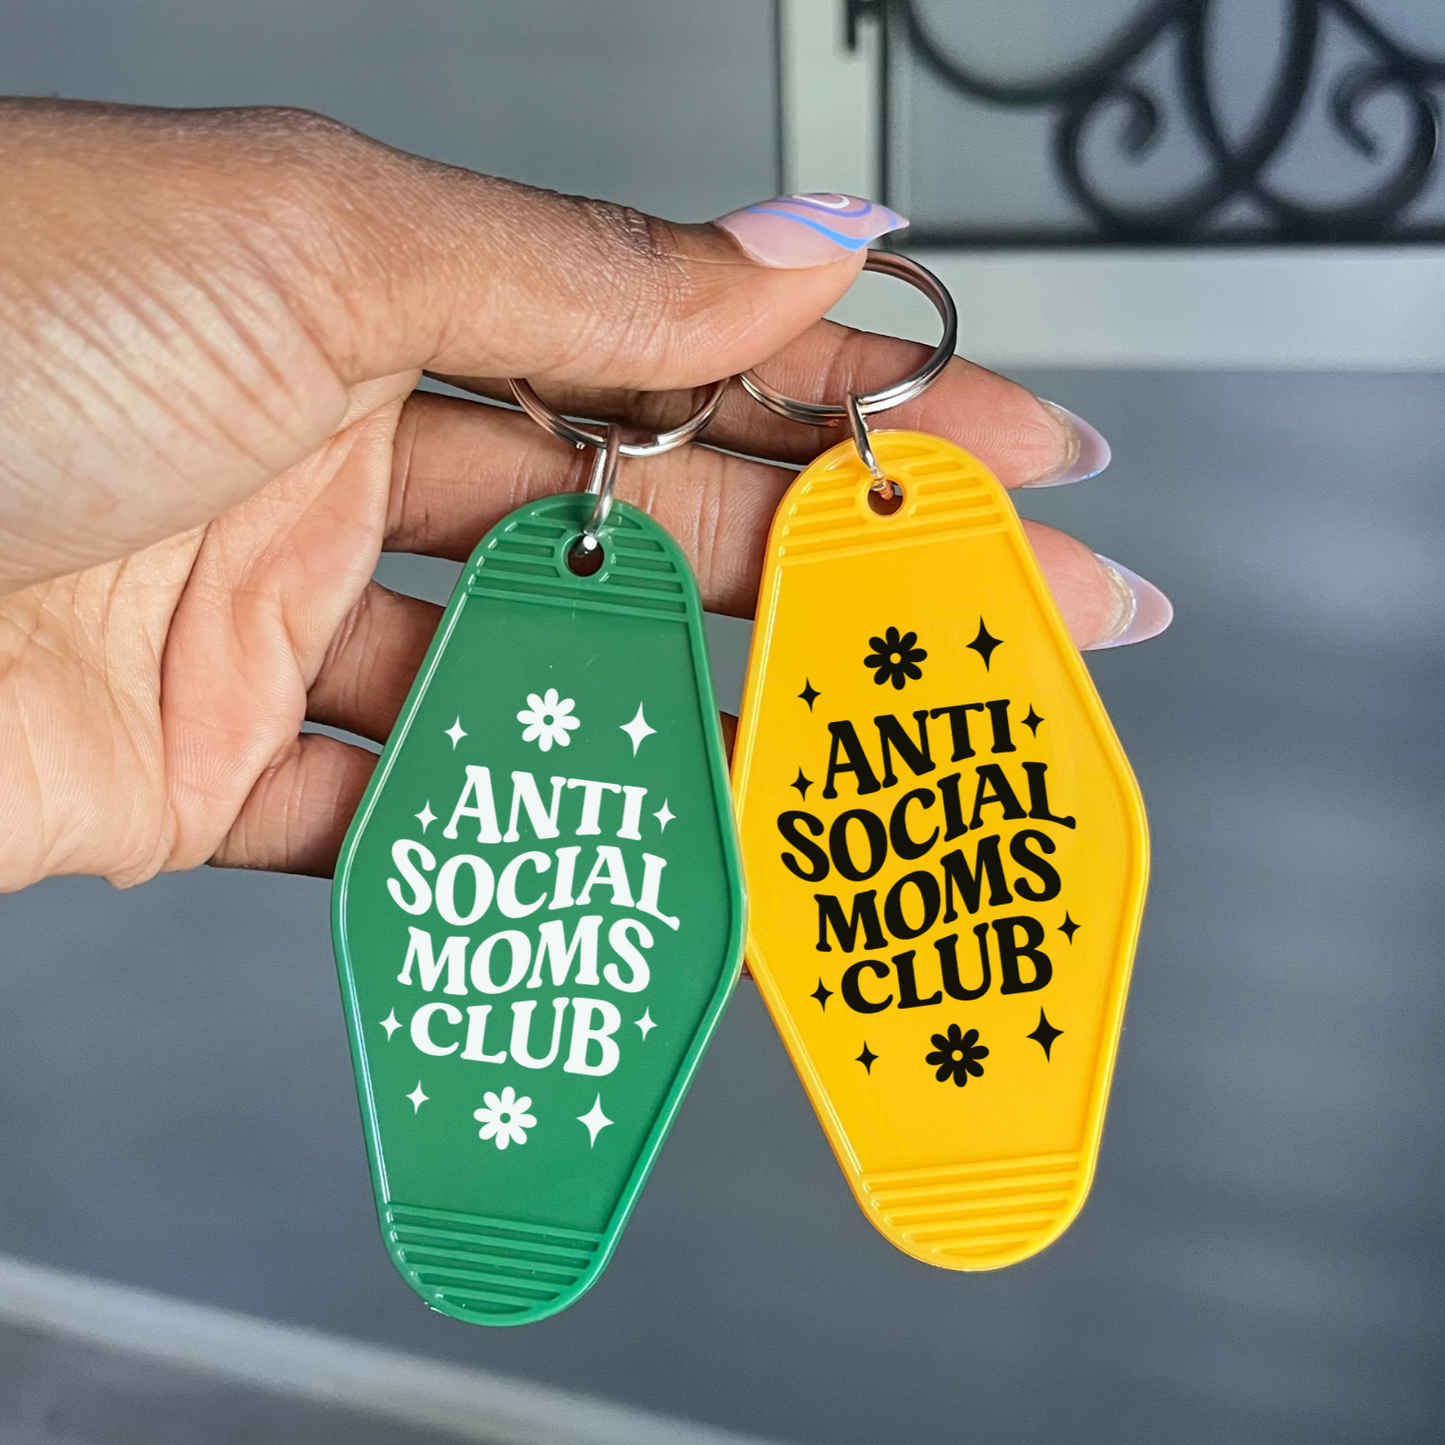 Antisocial Moms Club Keychain